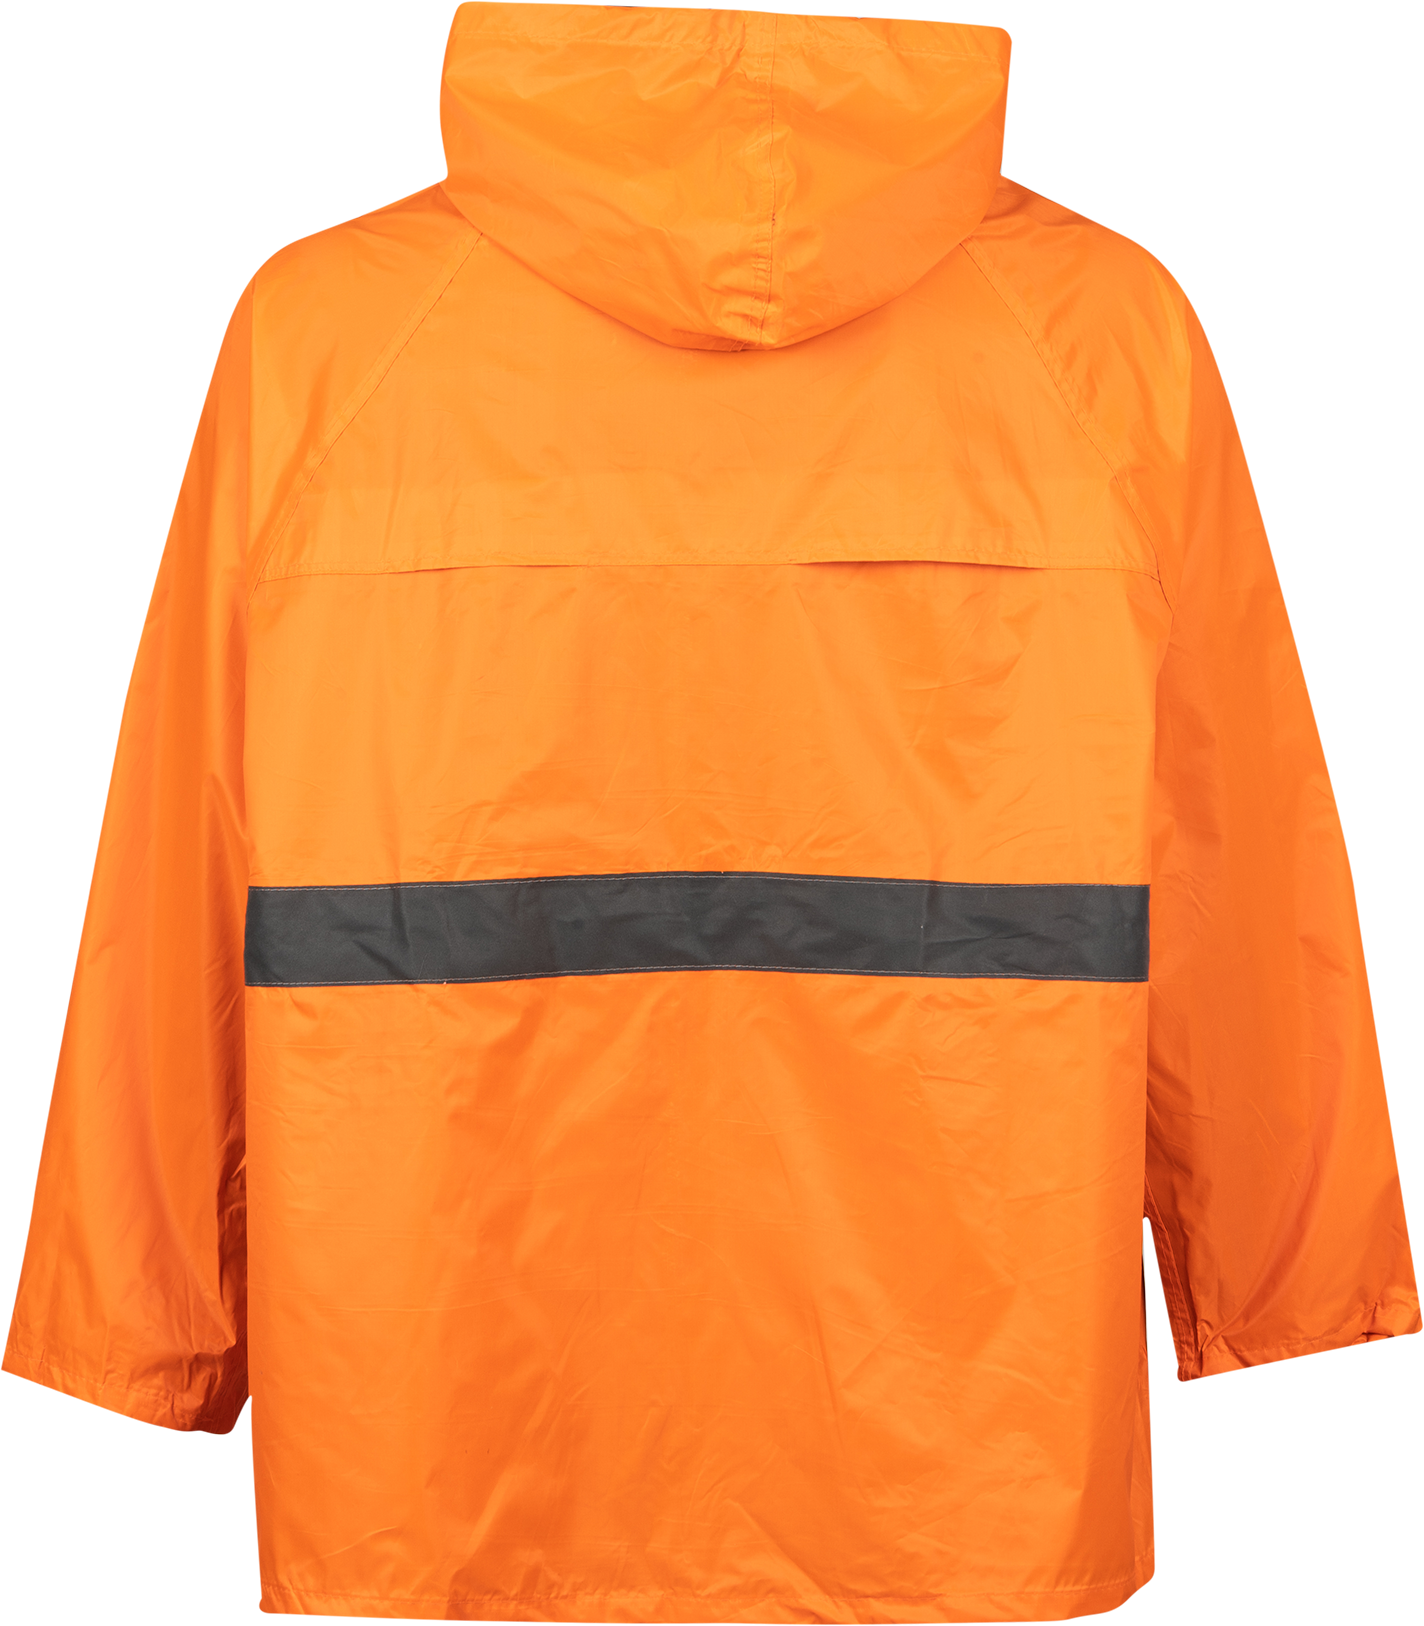 PIONEER Reflective Rain Suit - Orange